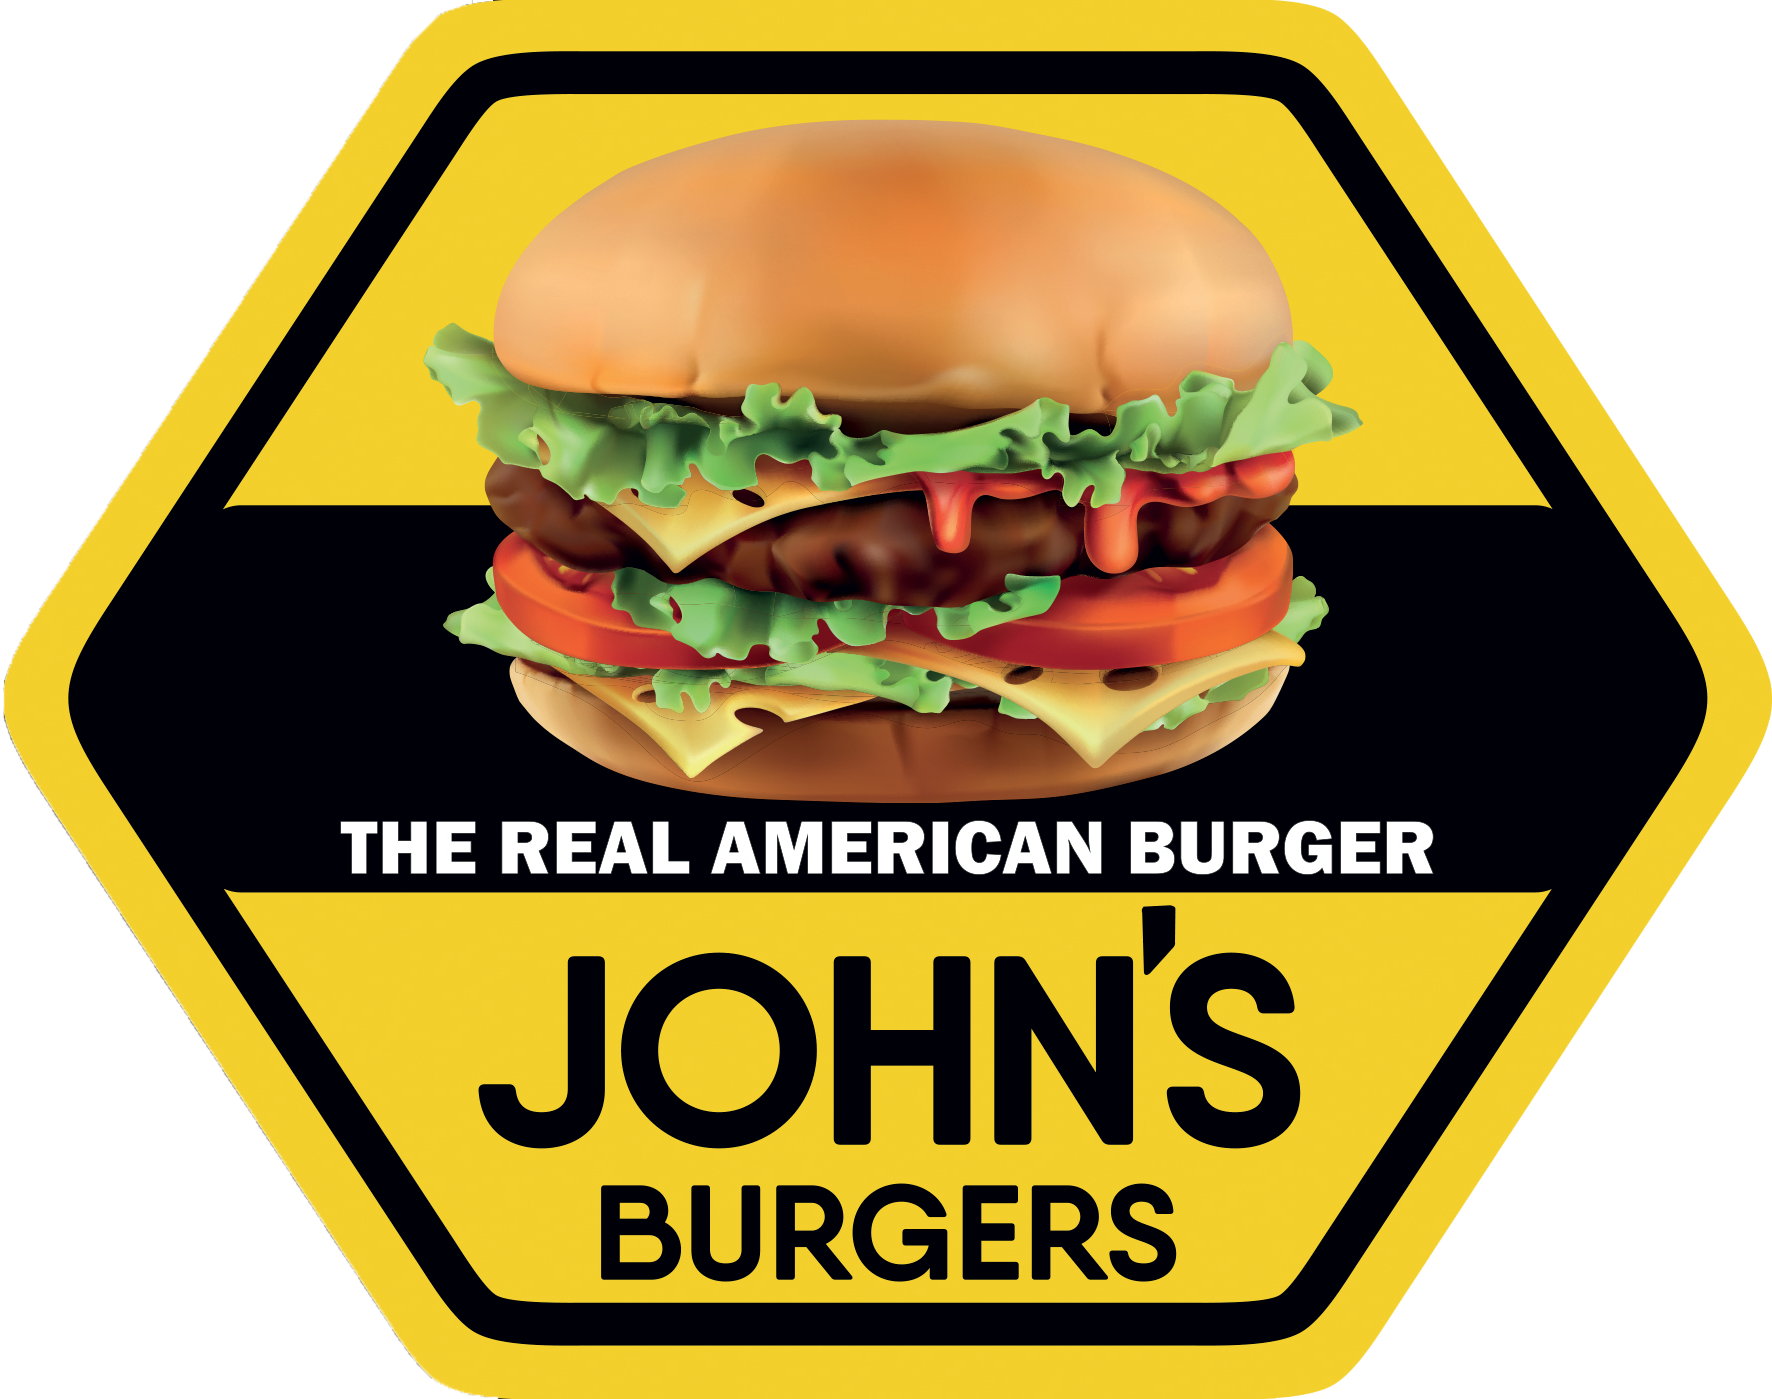 Johns Burgers